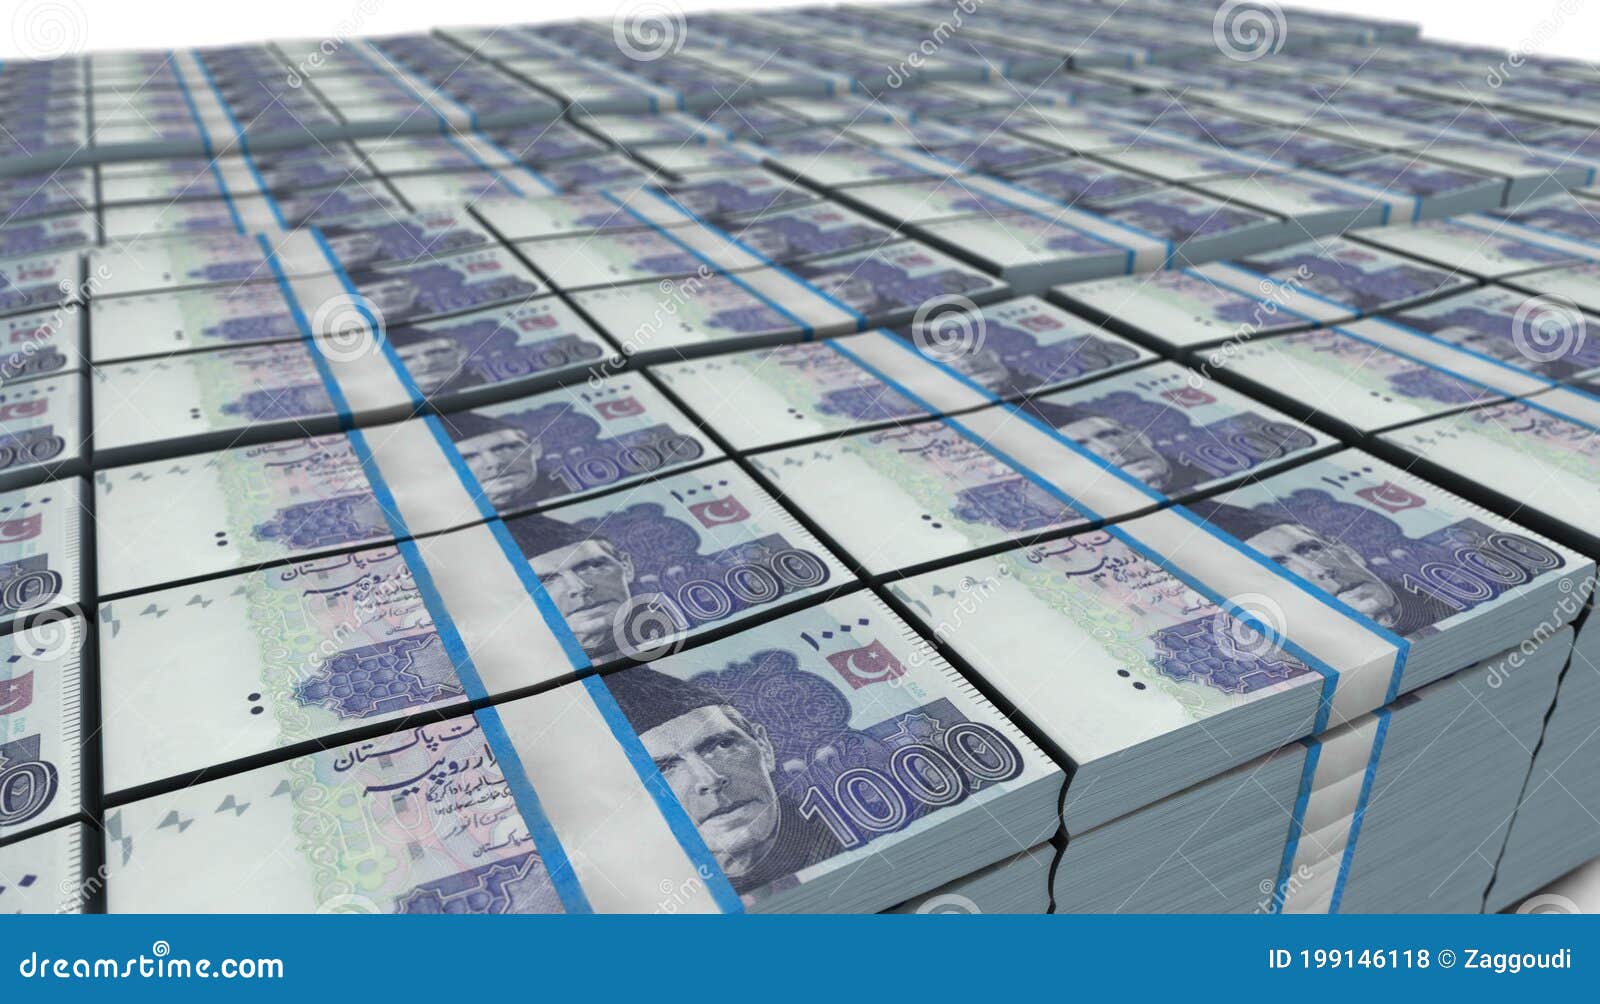 Malaysia 1 ringgit pakistani rupees today